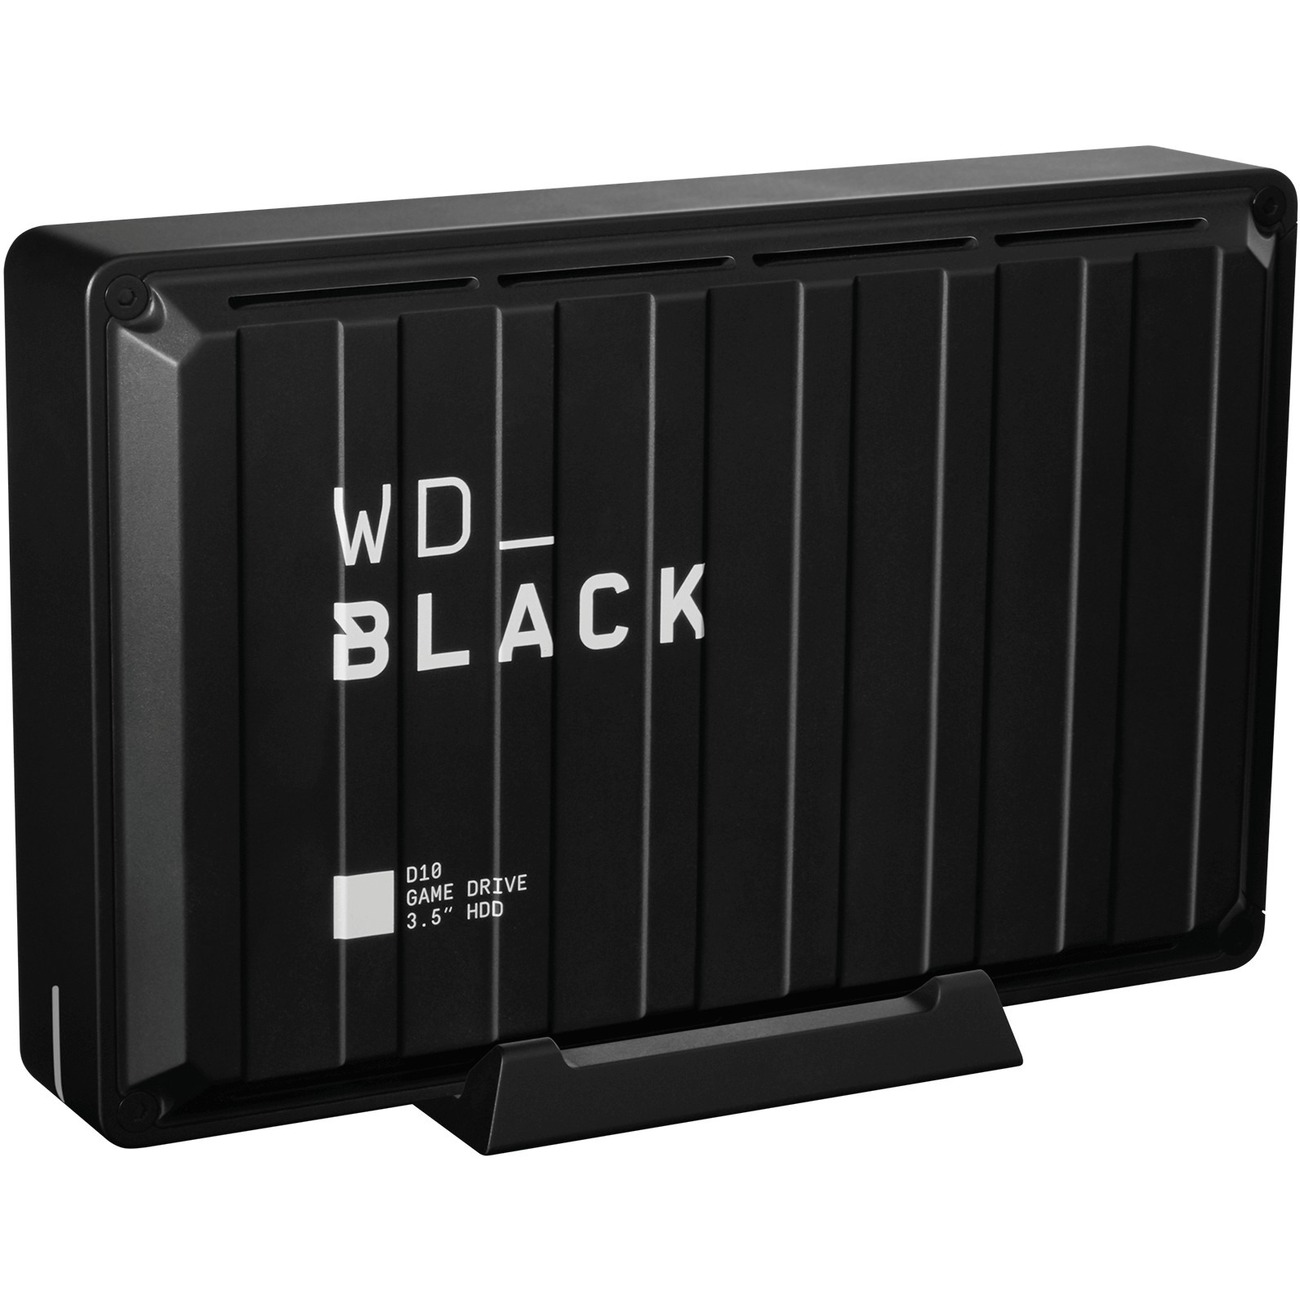 NeweggBusiness - WD Black 8TB D10 Game Drive Desktop External Hard